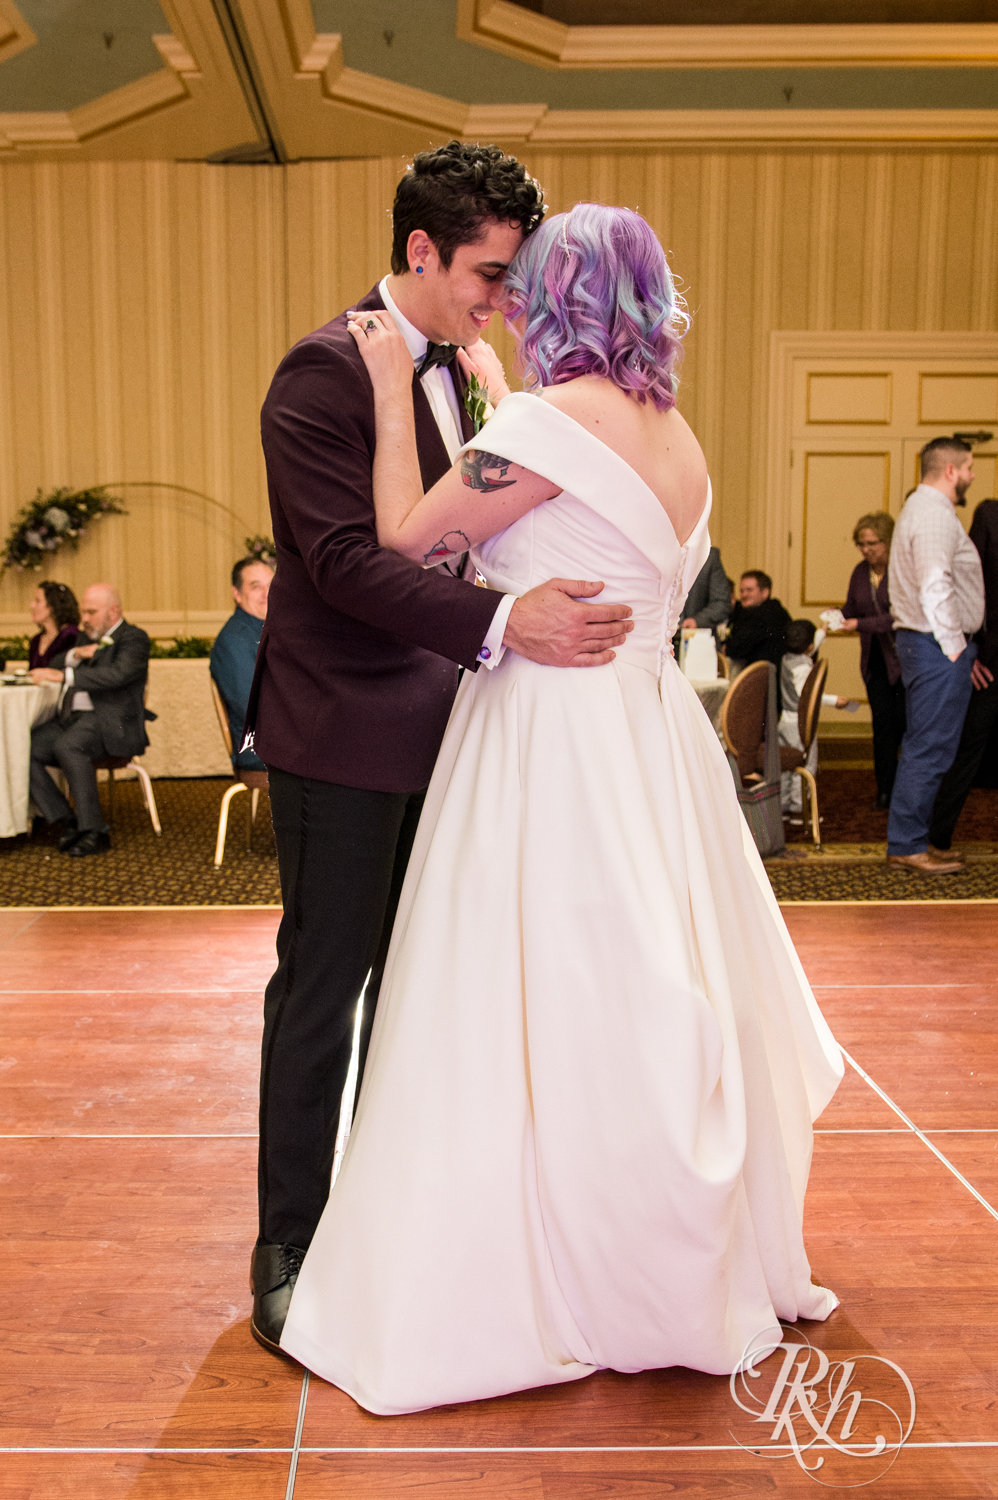 Bride and groom dance at wedding reception at the Saint Paul Hotel in Saint Paul, Minnesota.